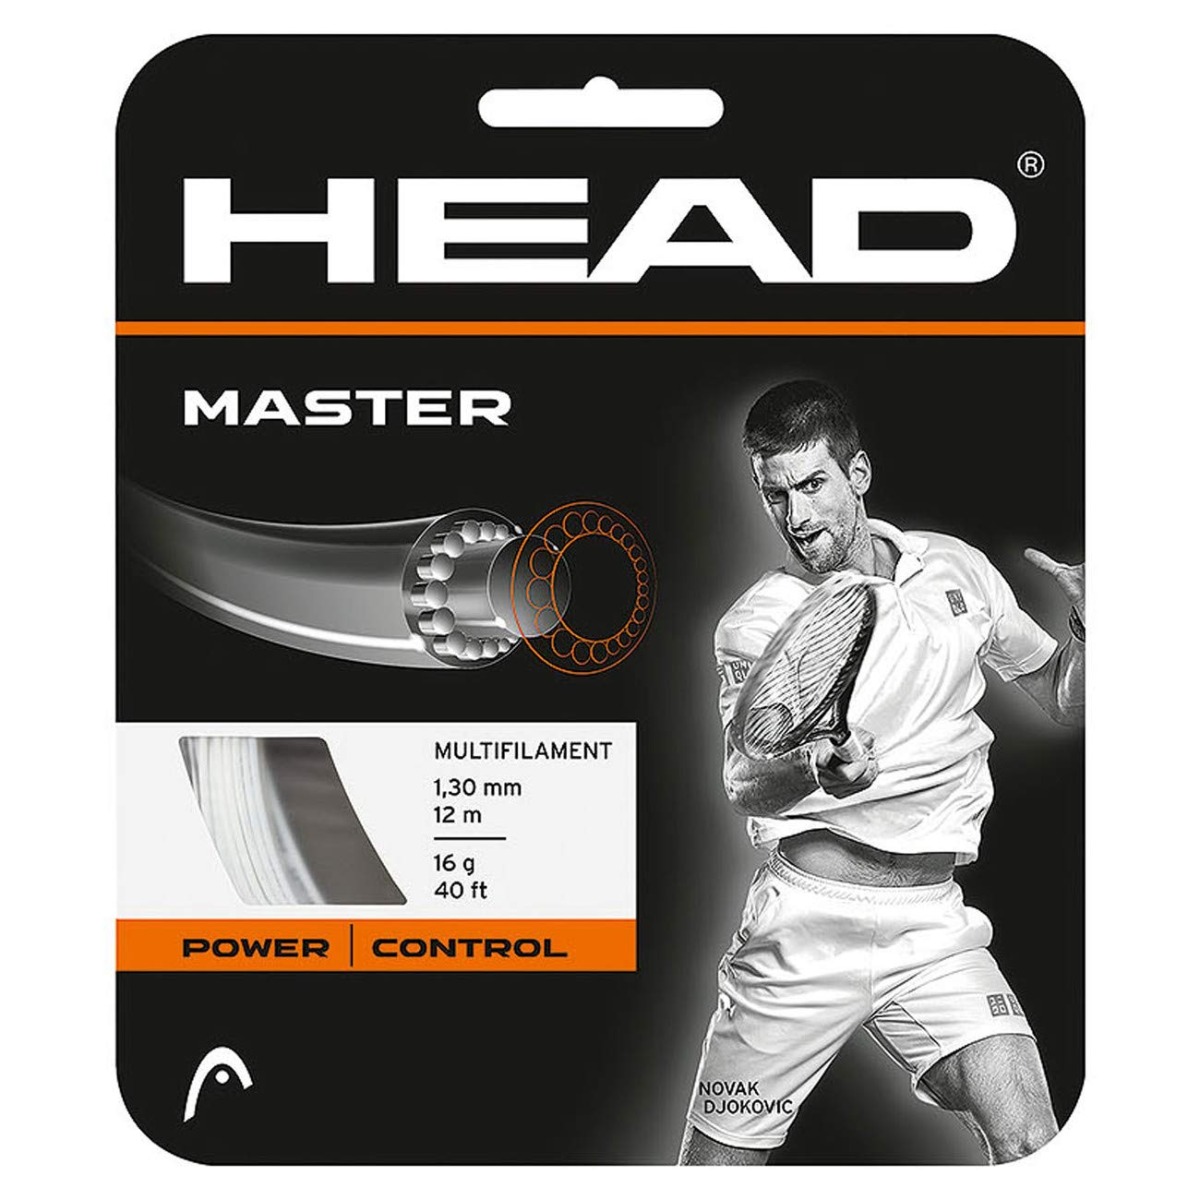 Buy Head Master 16L at best price Tennis Strings Online Sports365